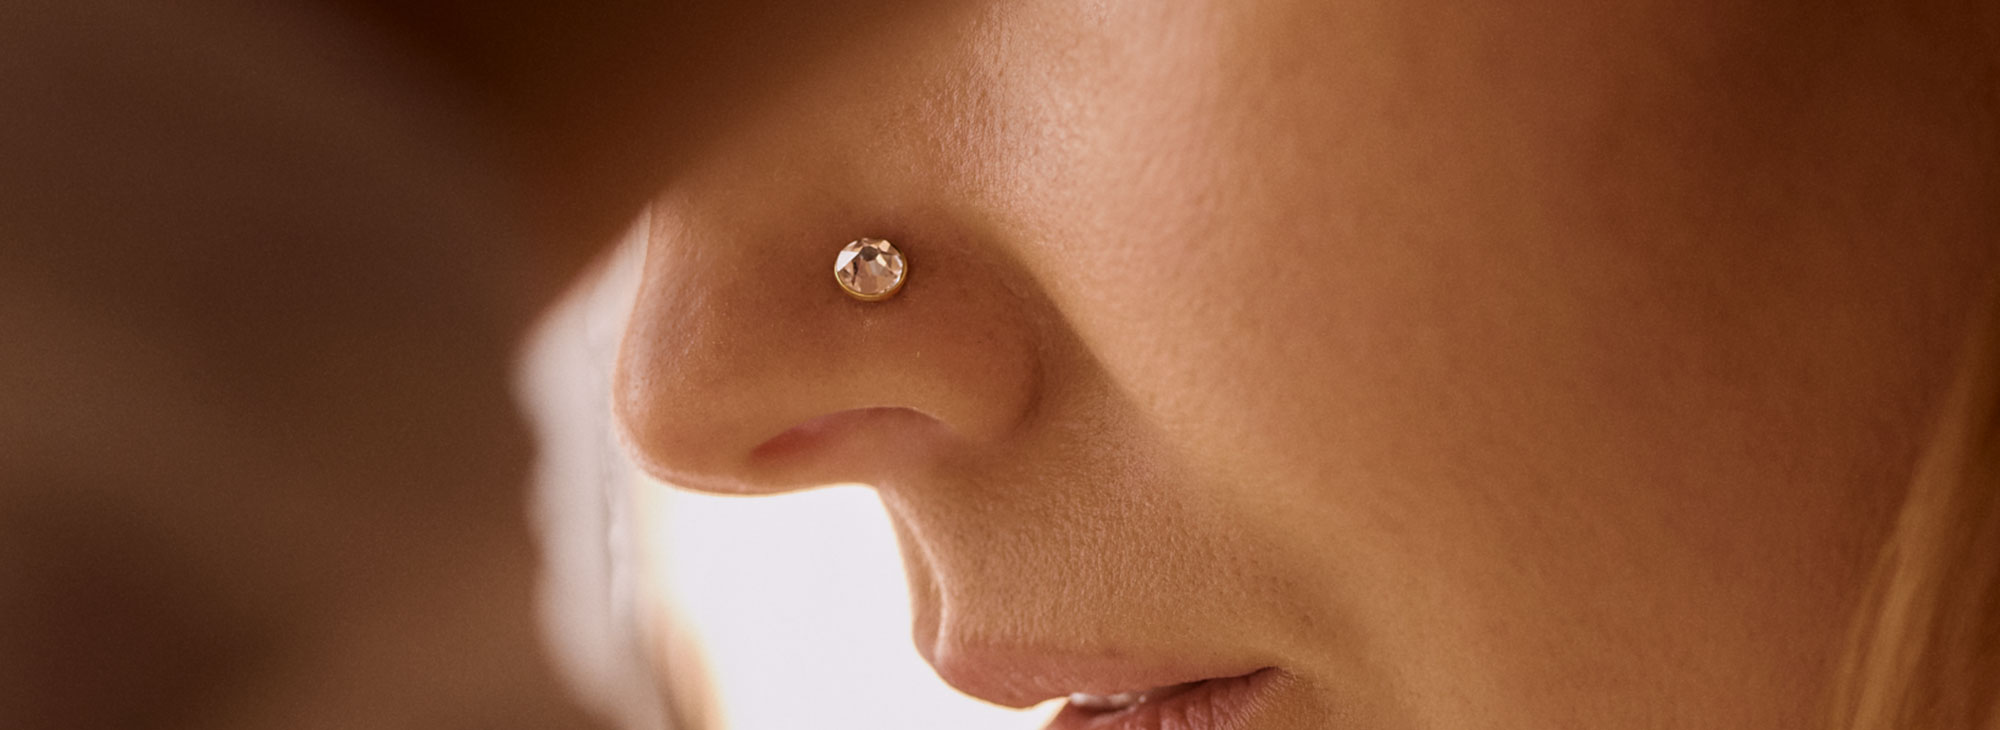 Skin friendly nose jewellery for women